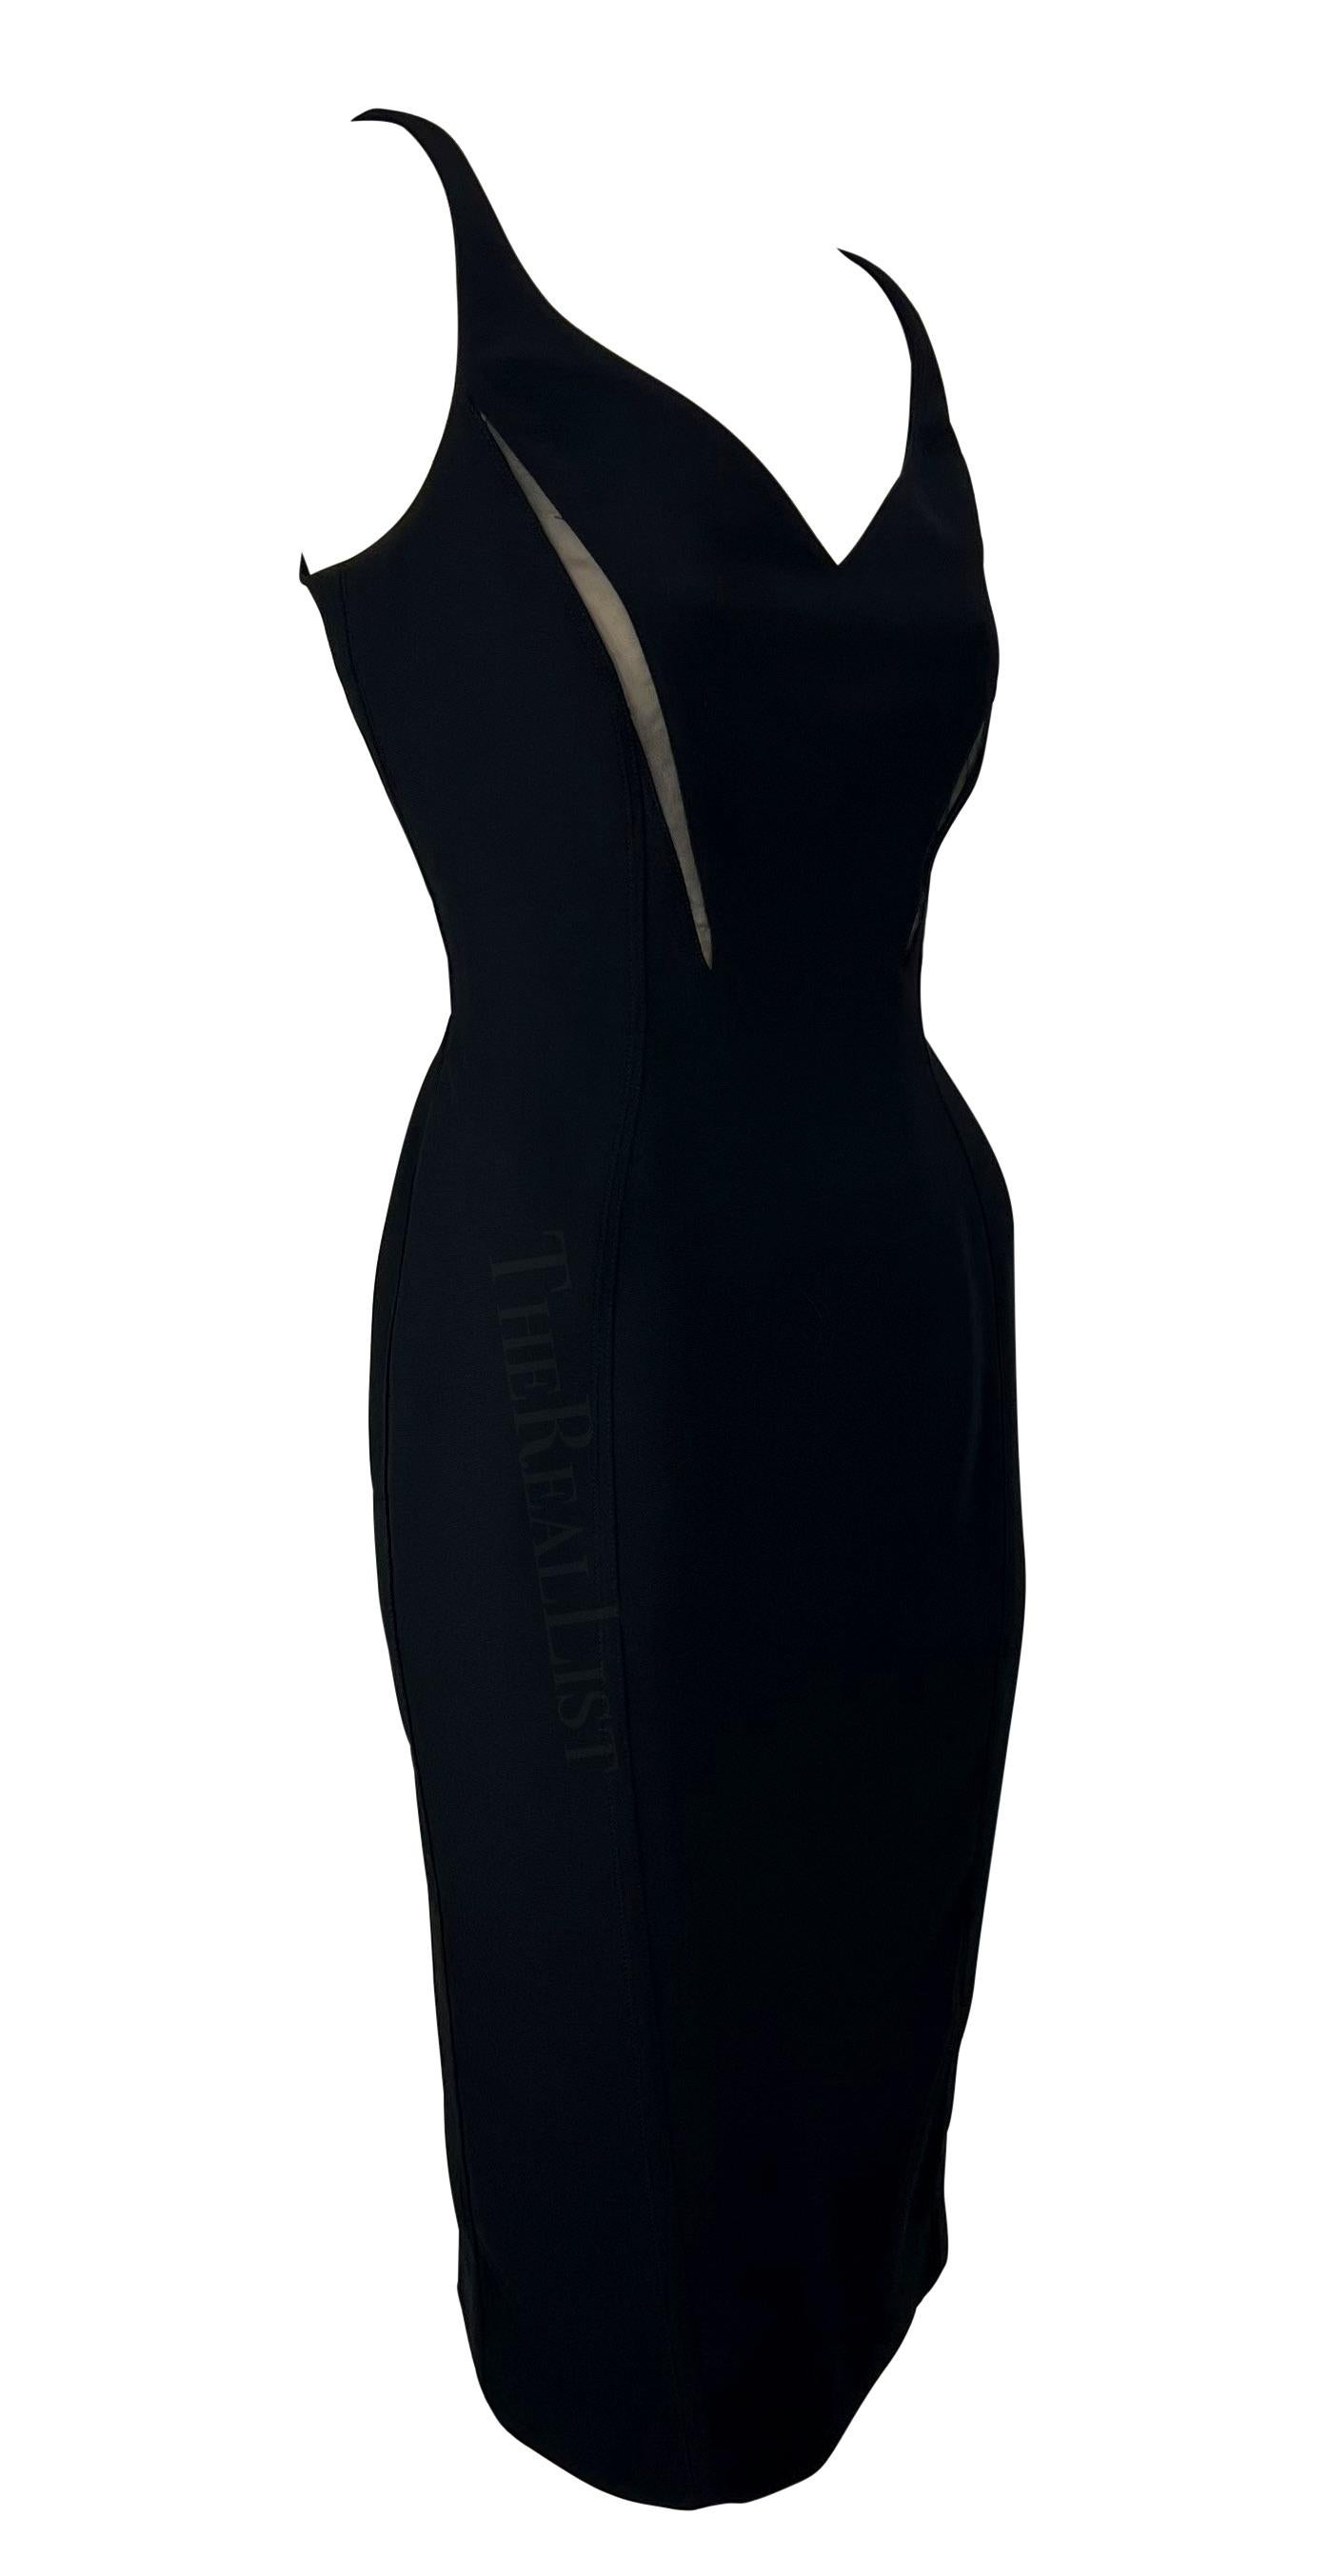 S/S 1999 Thierry Mugler Mesh Panel Little Black Dress For Sale 2